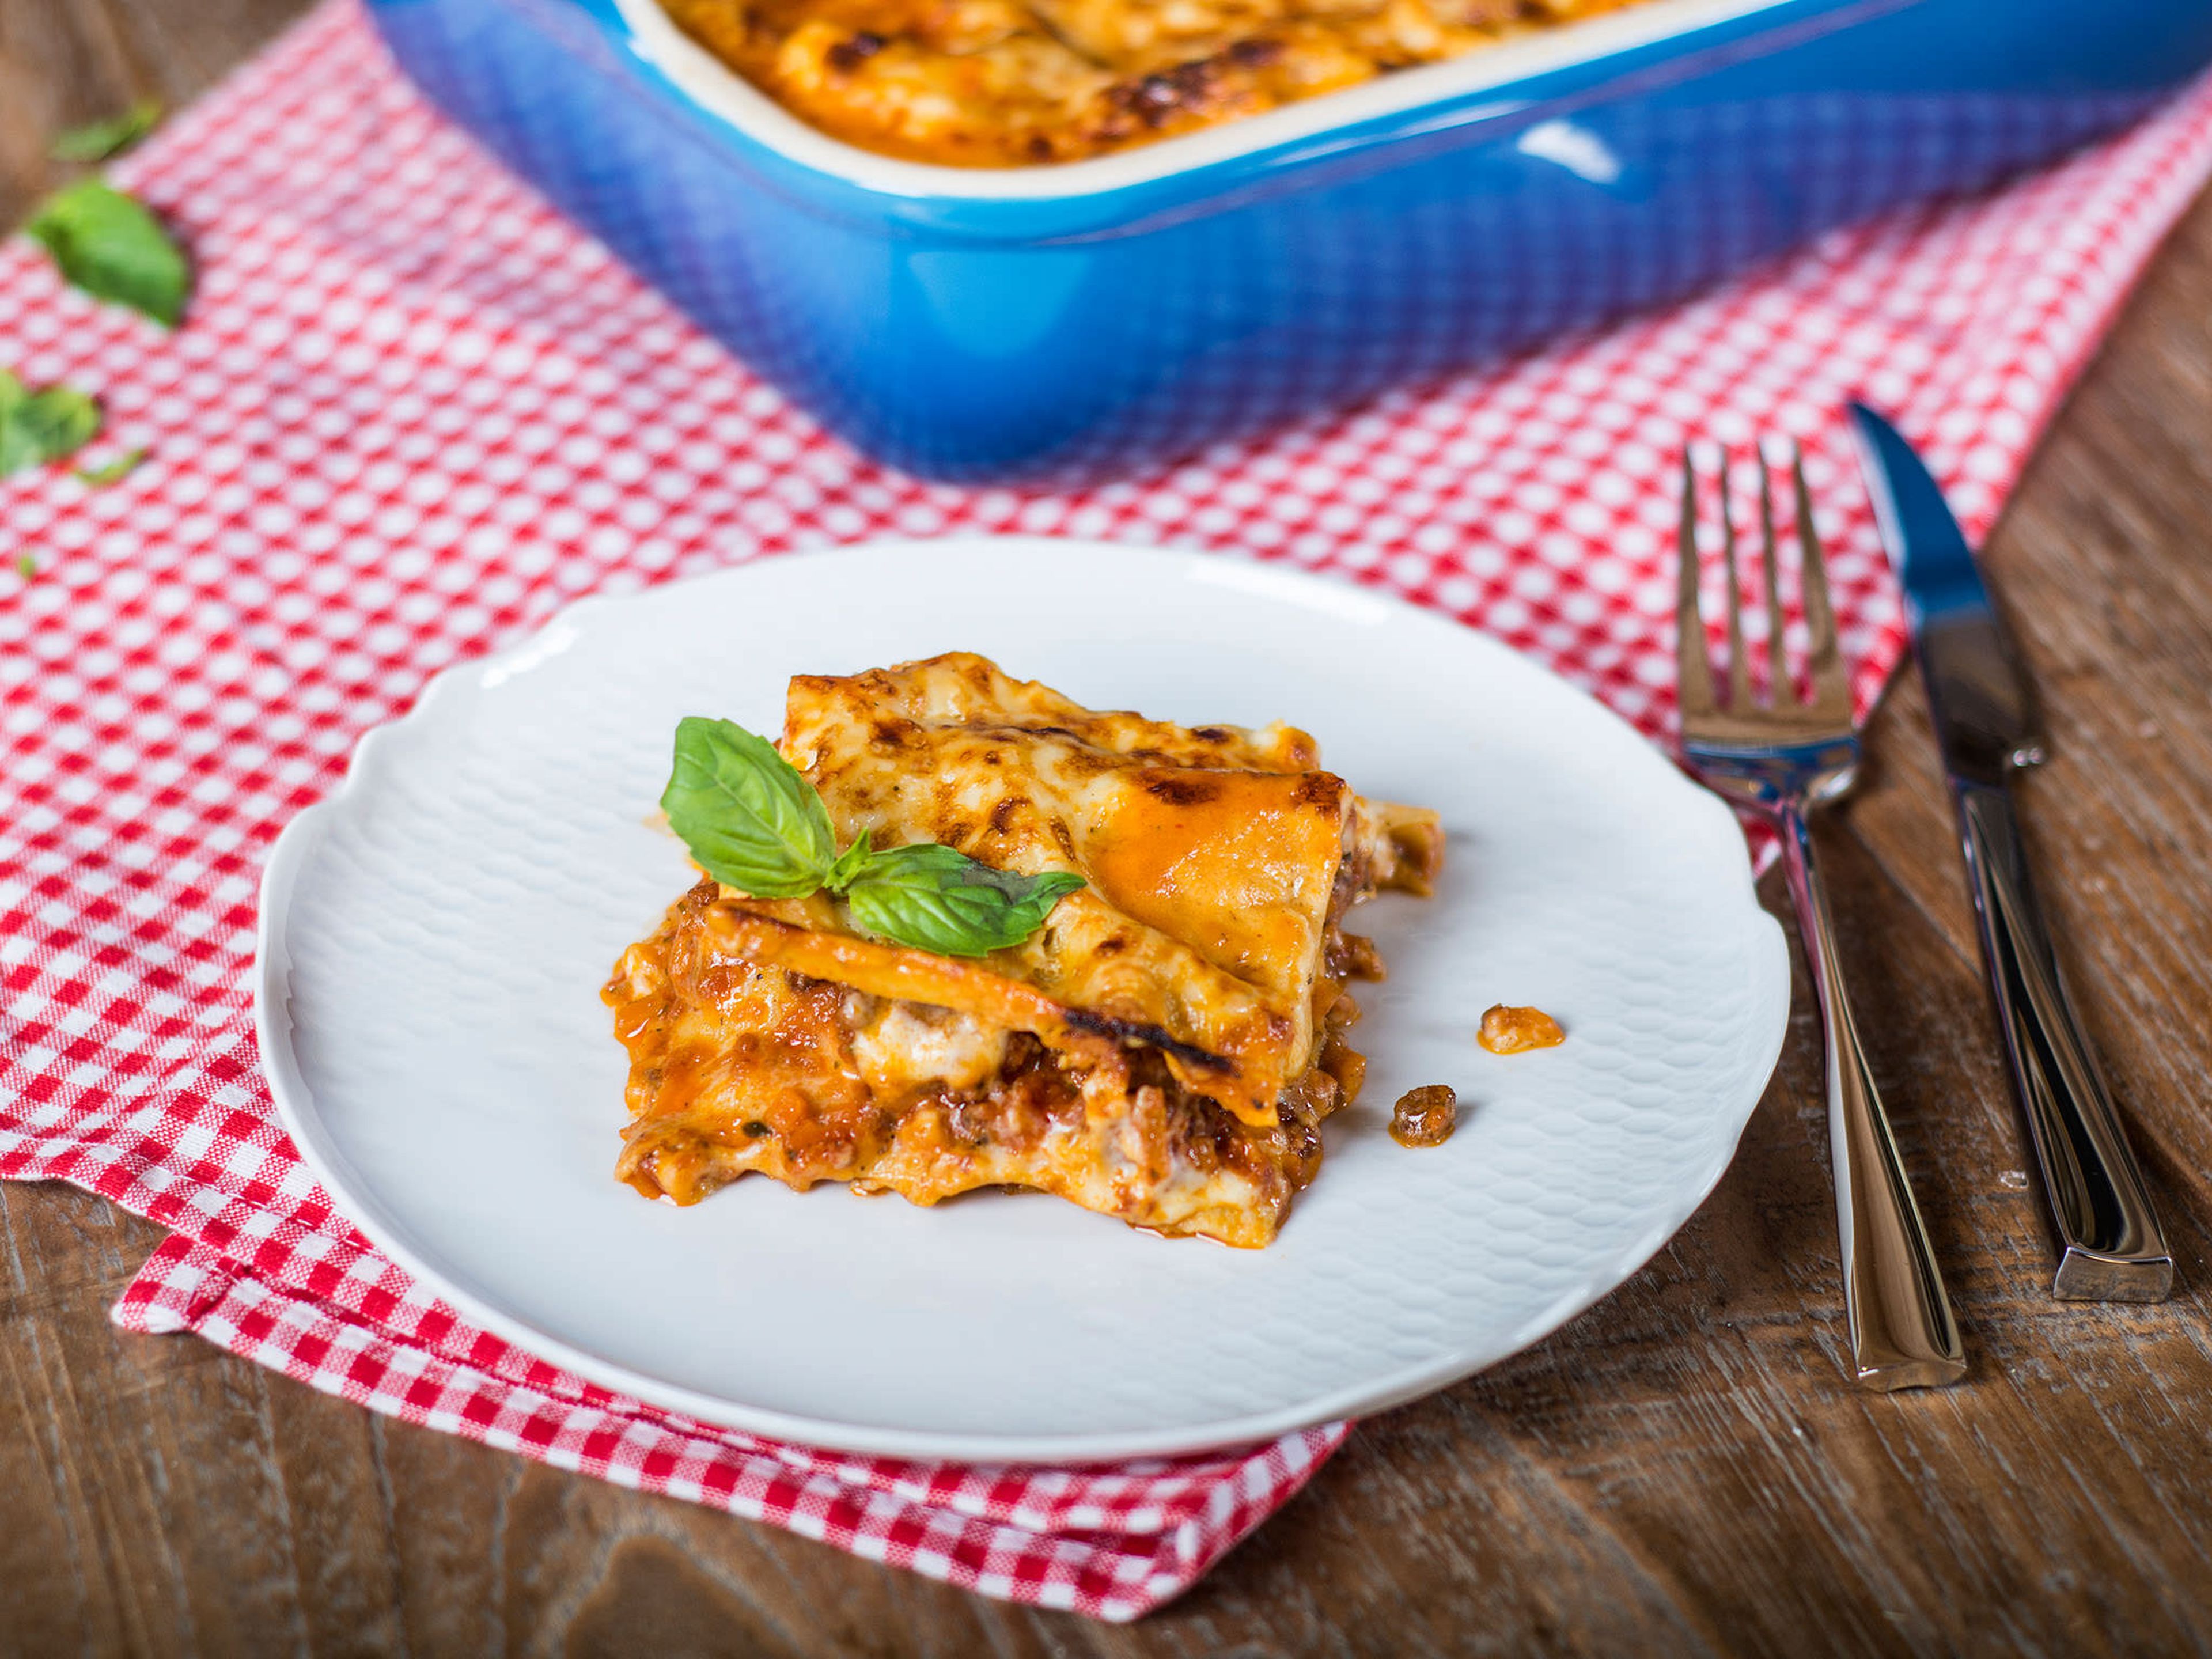 Easy Italian lasagna